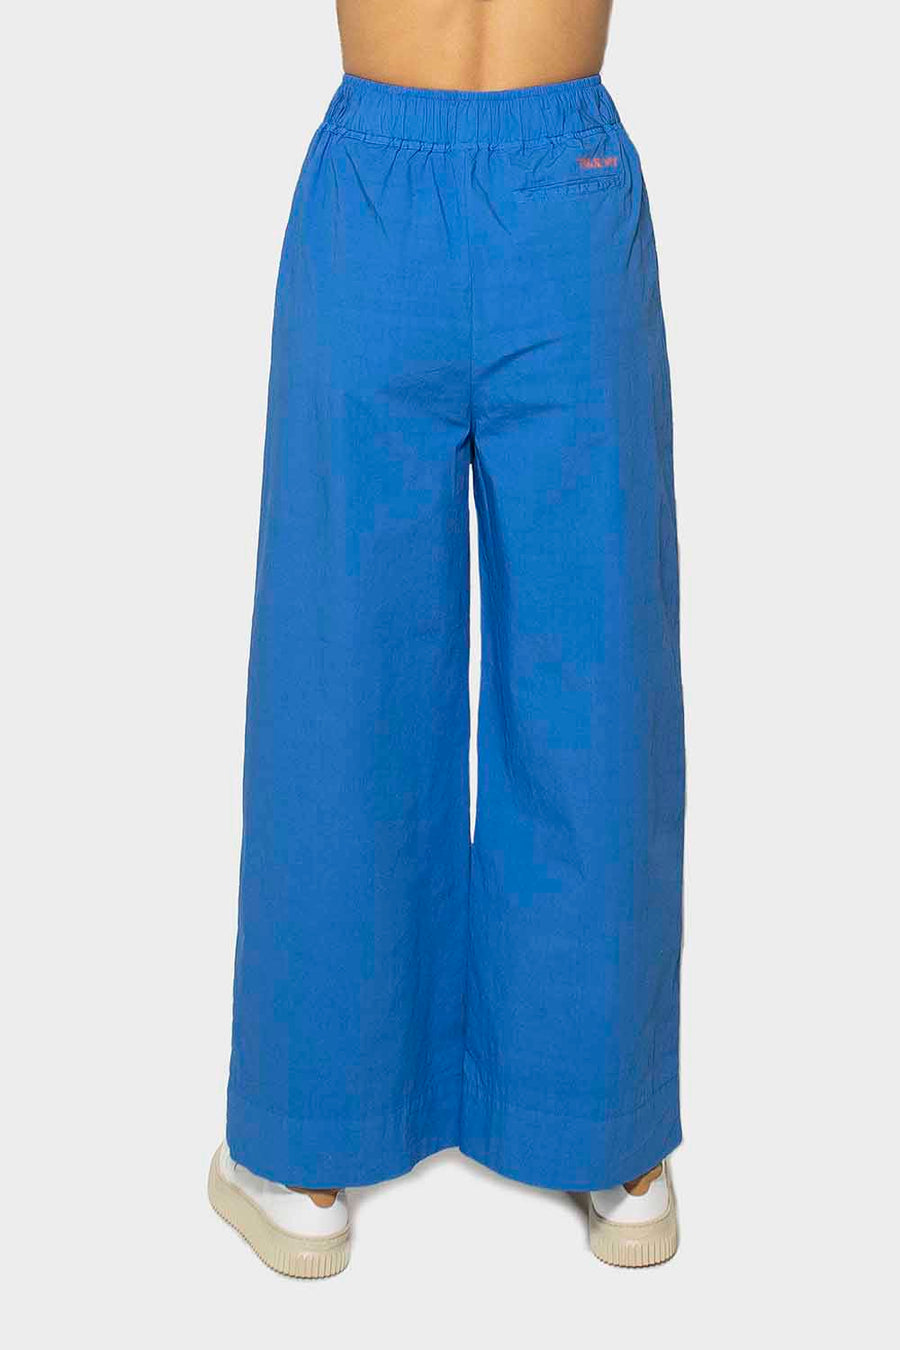 Pantalone True Nyc in cotone blu baloon